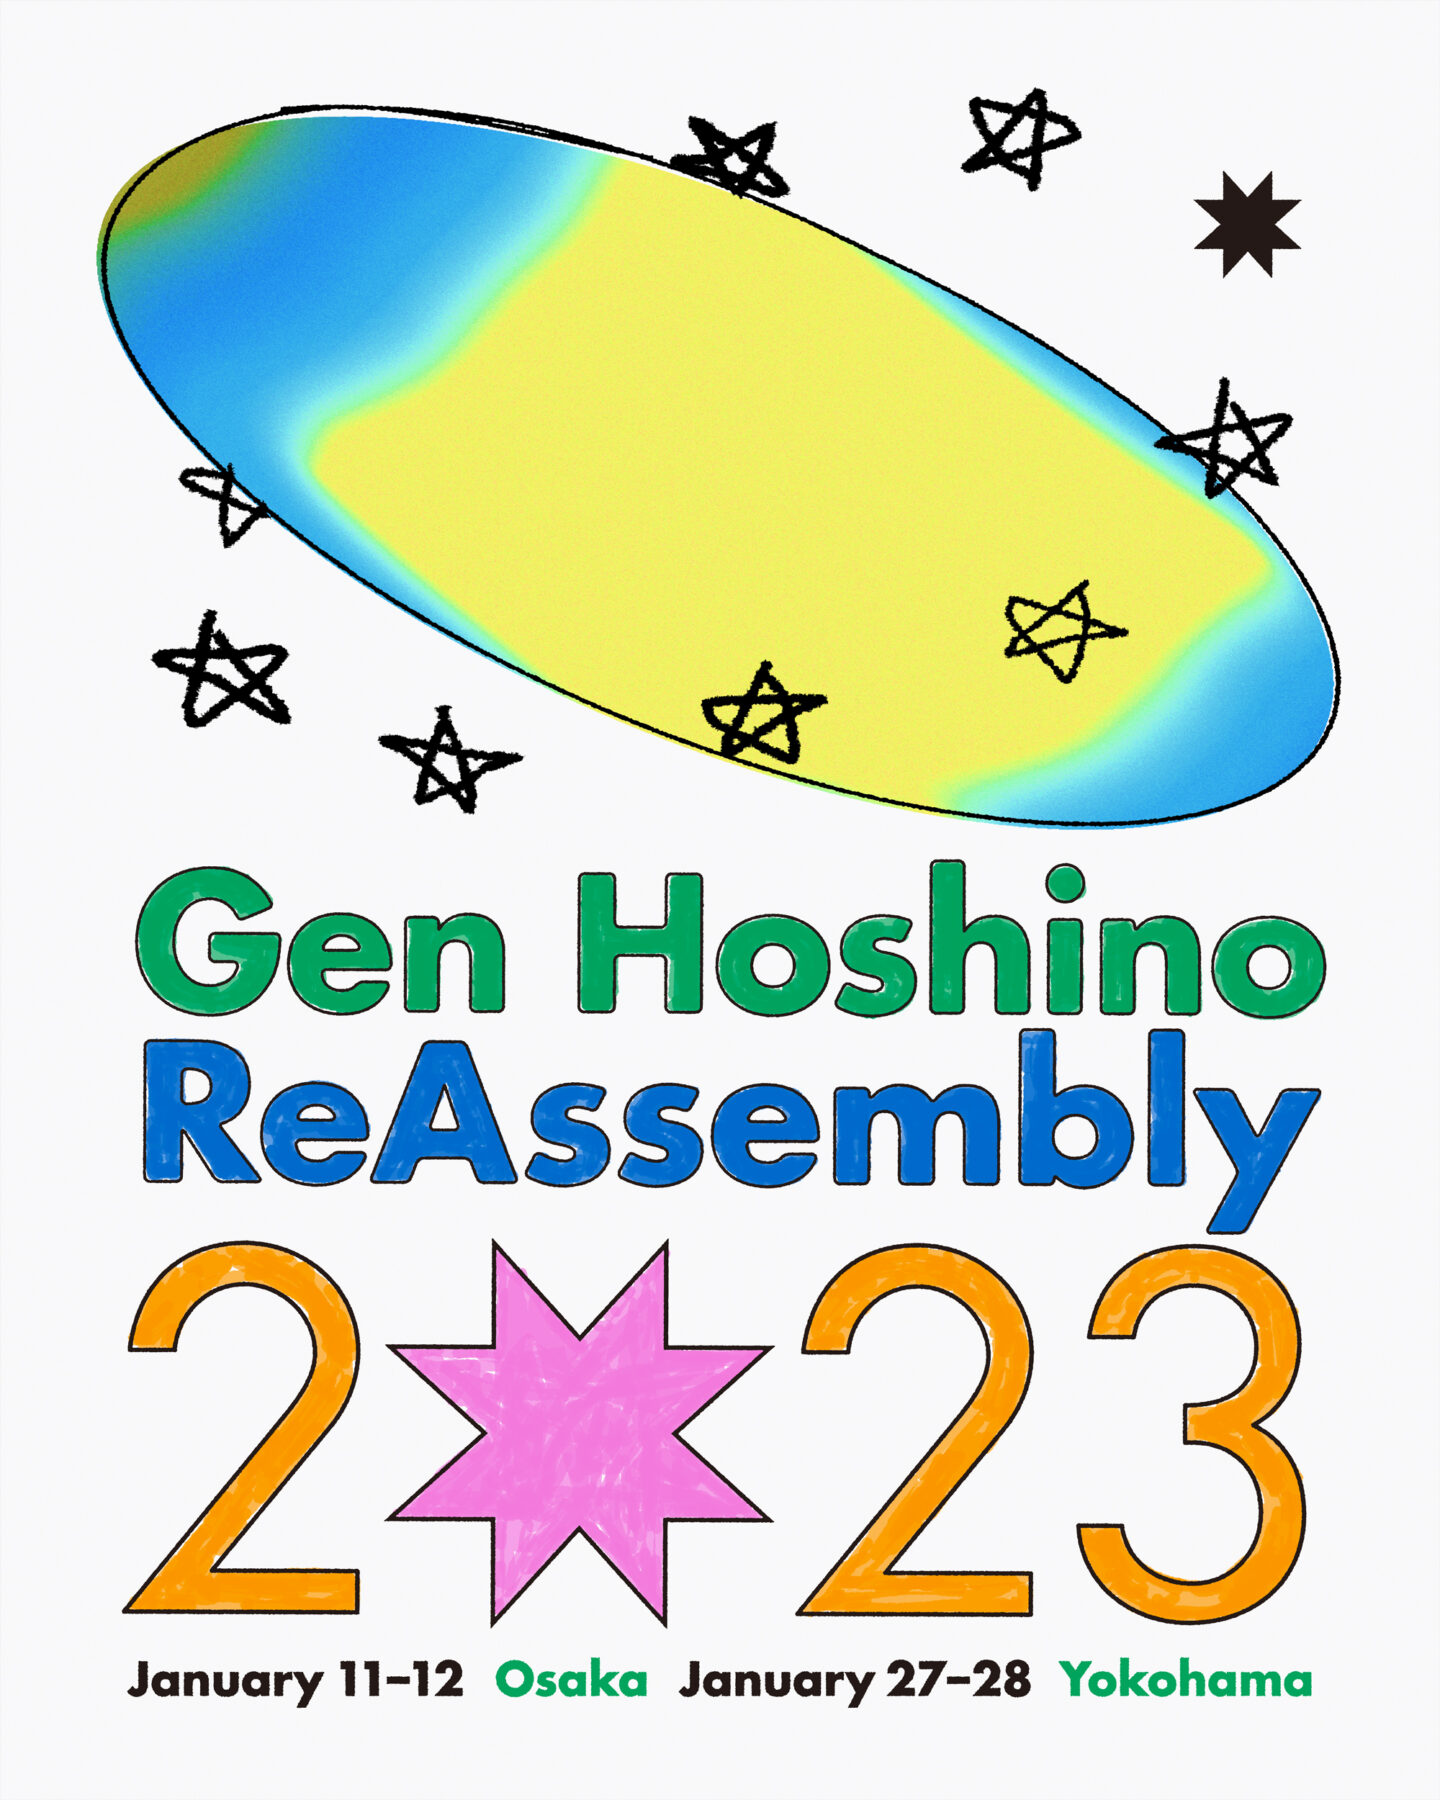 Gen Hoshino Presents “Reassembly”